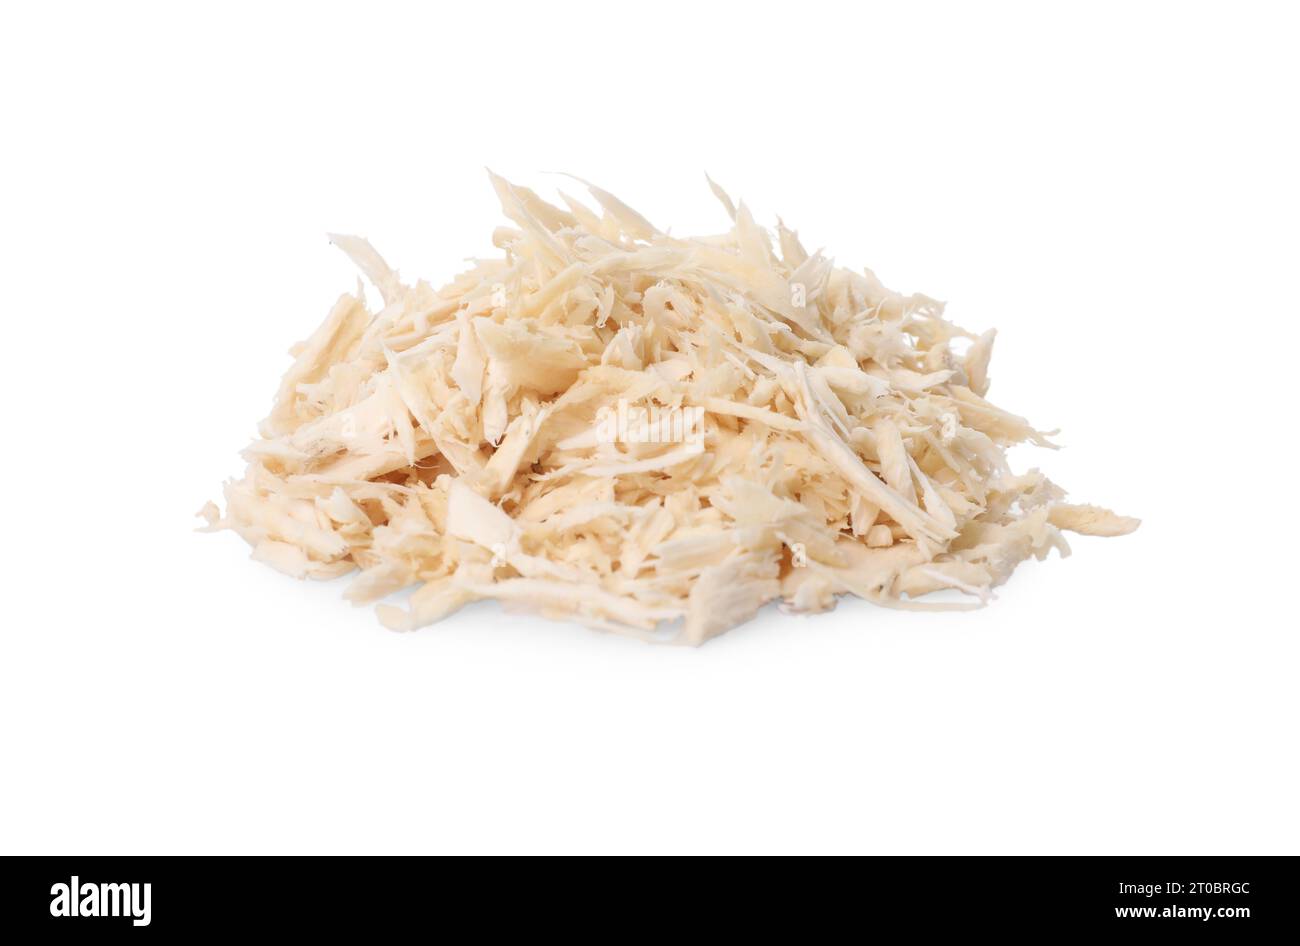 Pile of grated horseradish isolated on white Stock Photo